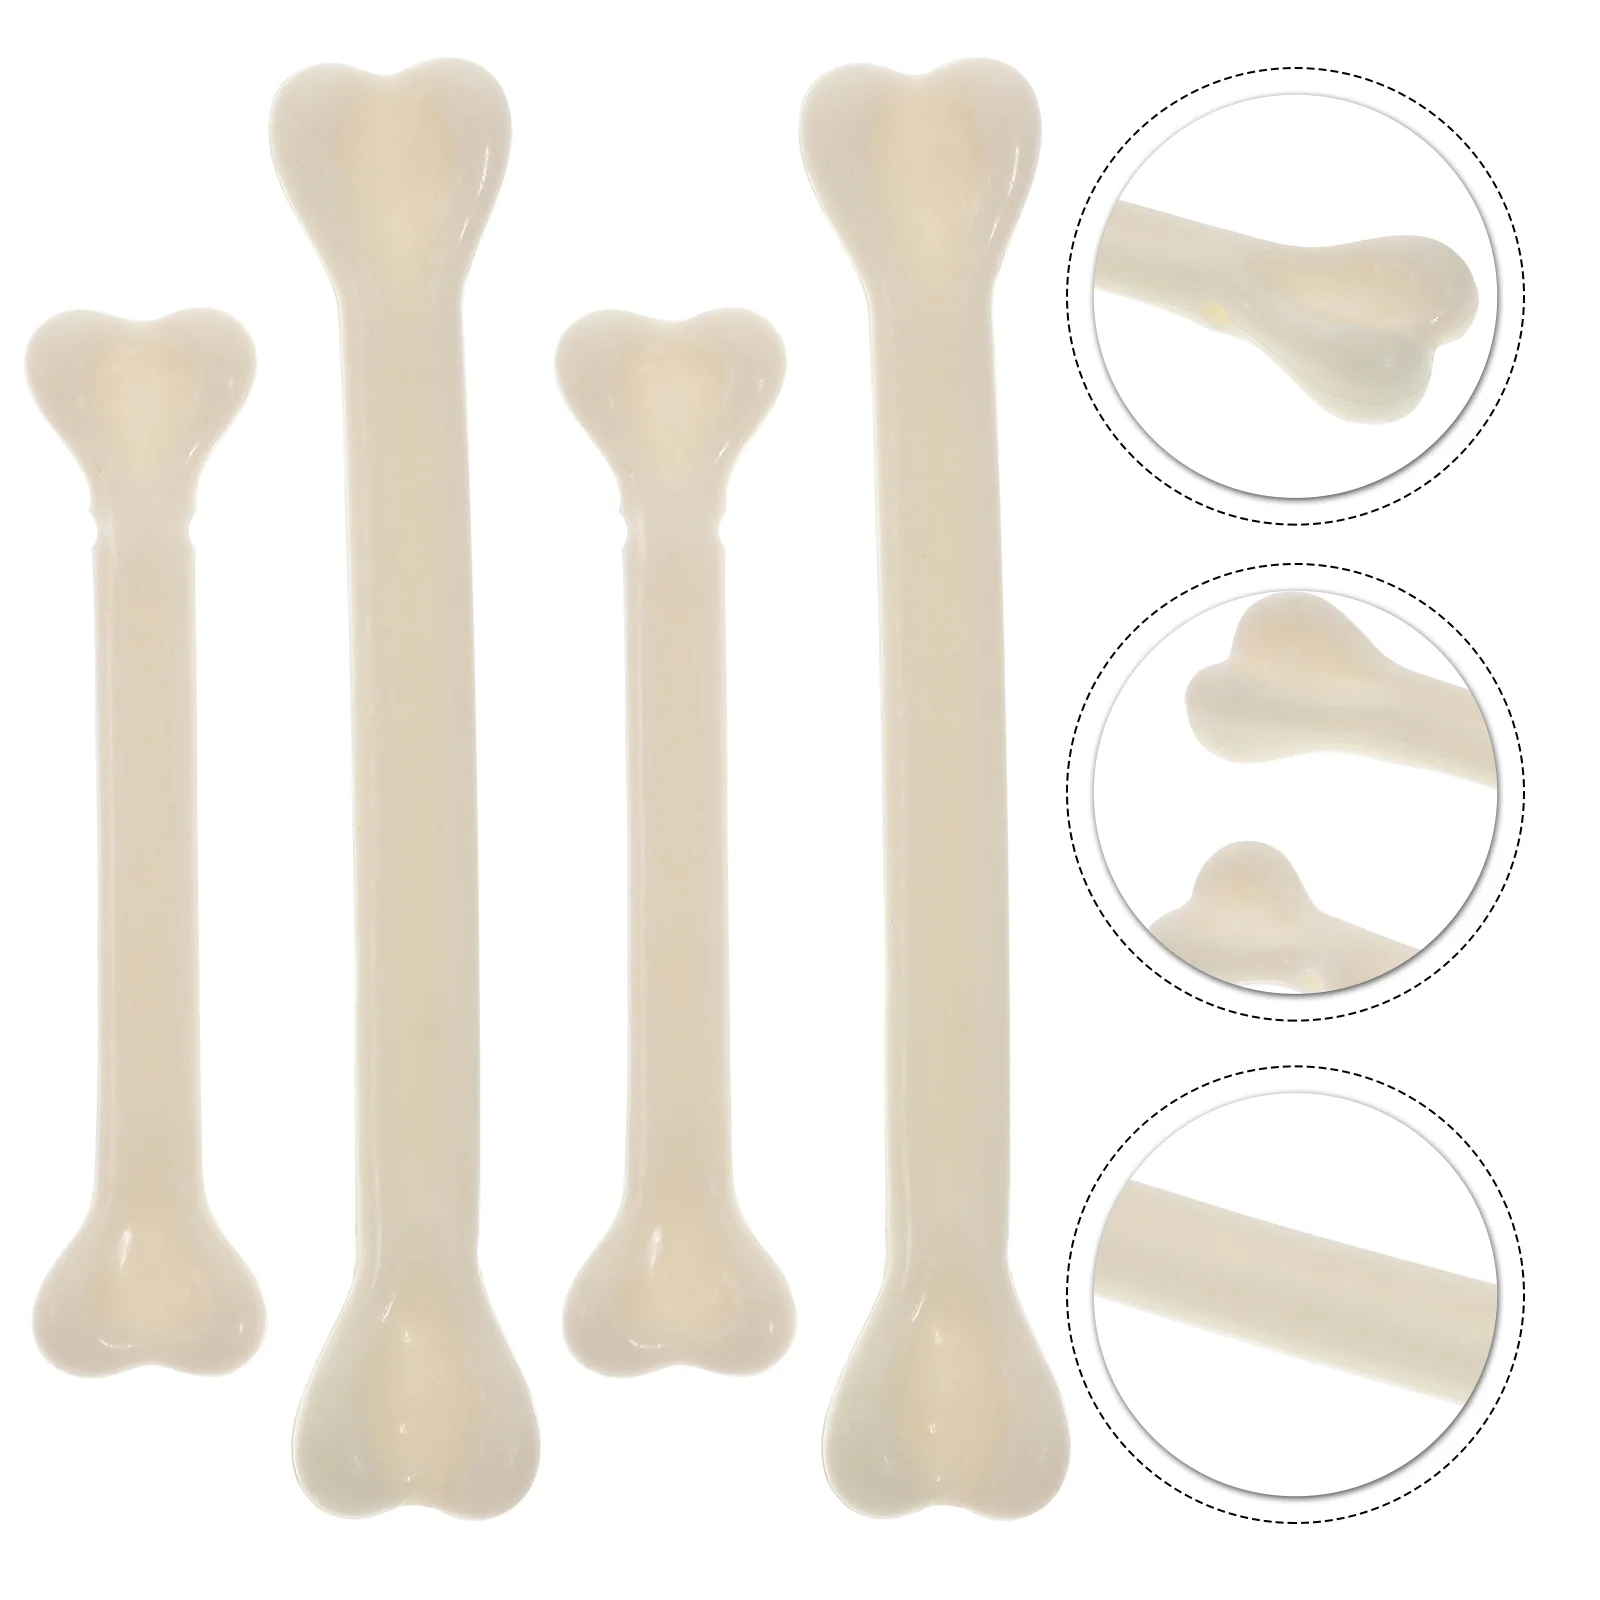 

48 Pcs Ghost Decor Halloween Bones Small Plastic Party Decoration Supplies Artificial White Props